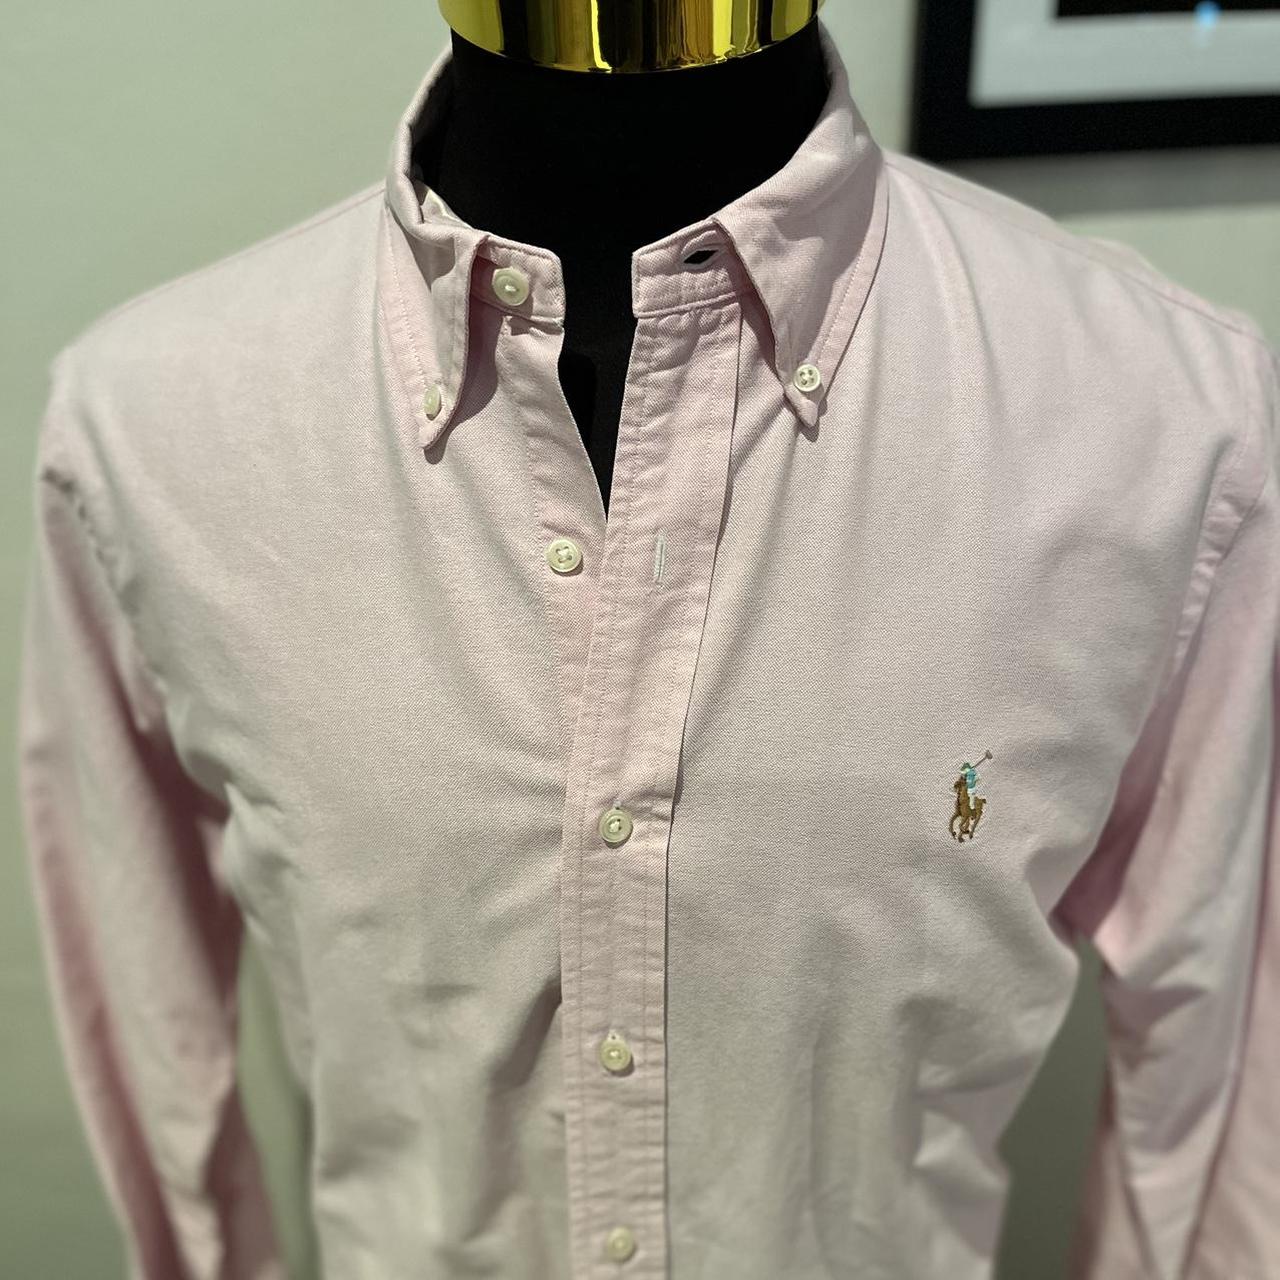 Ralph Lauren Polo Ralph Lauren 100% Cotton Pink Shirt Size Large Button Down Collar Classic Fit